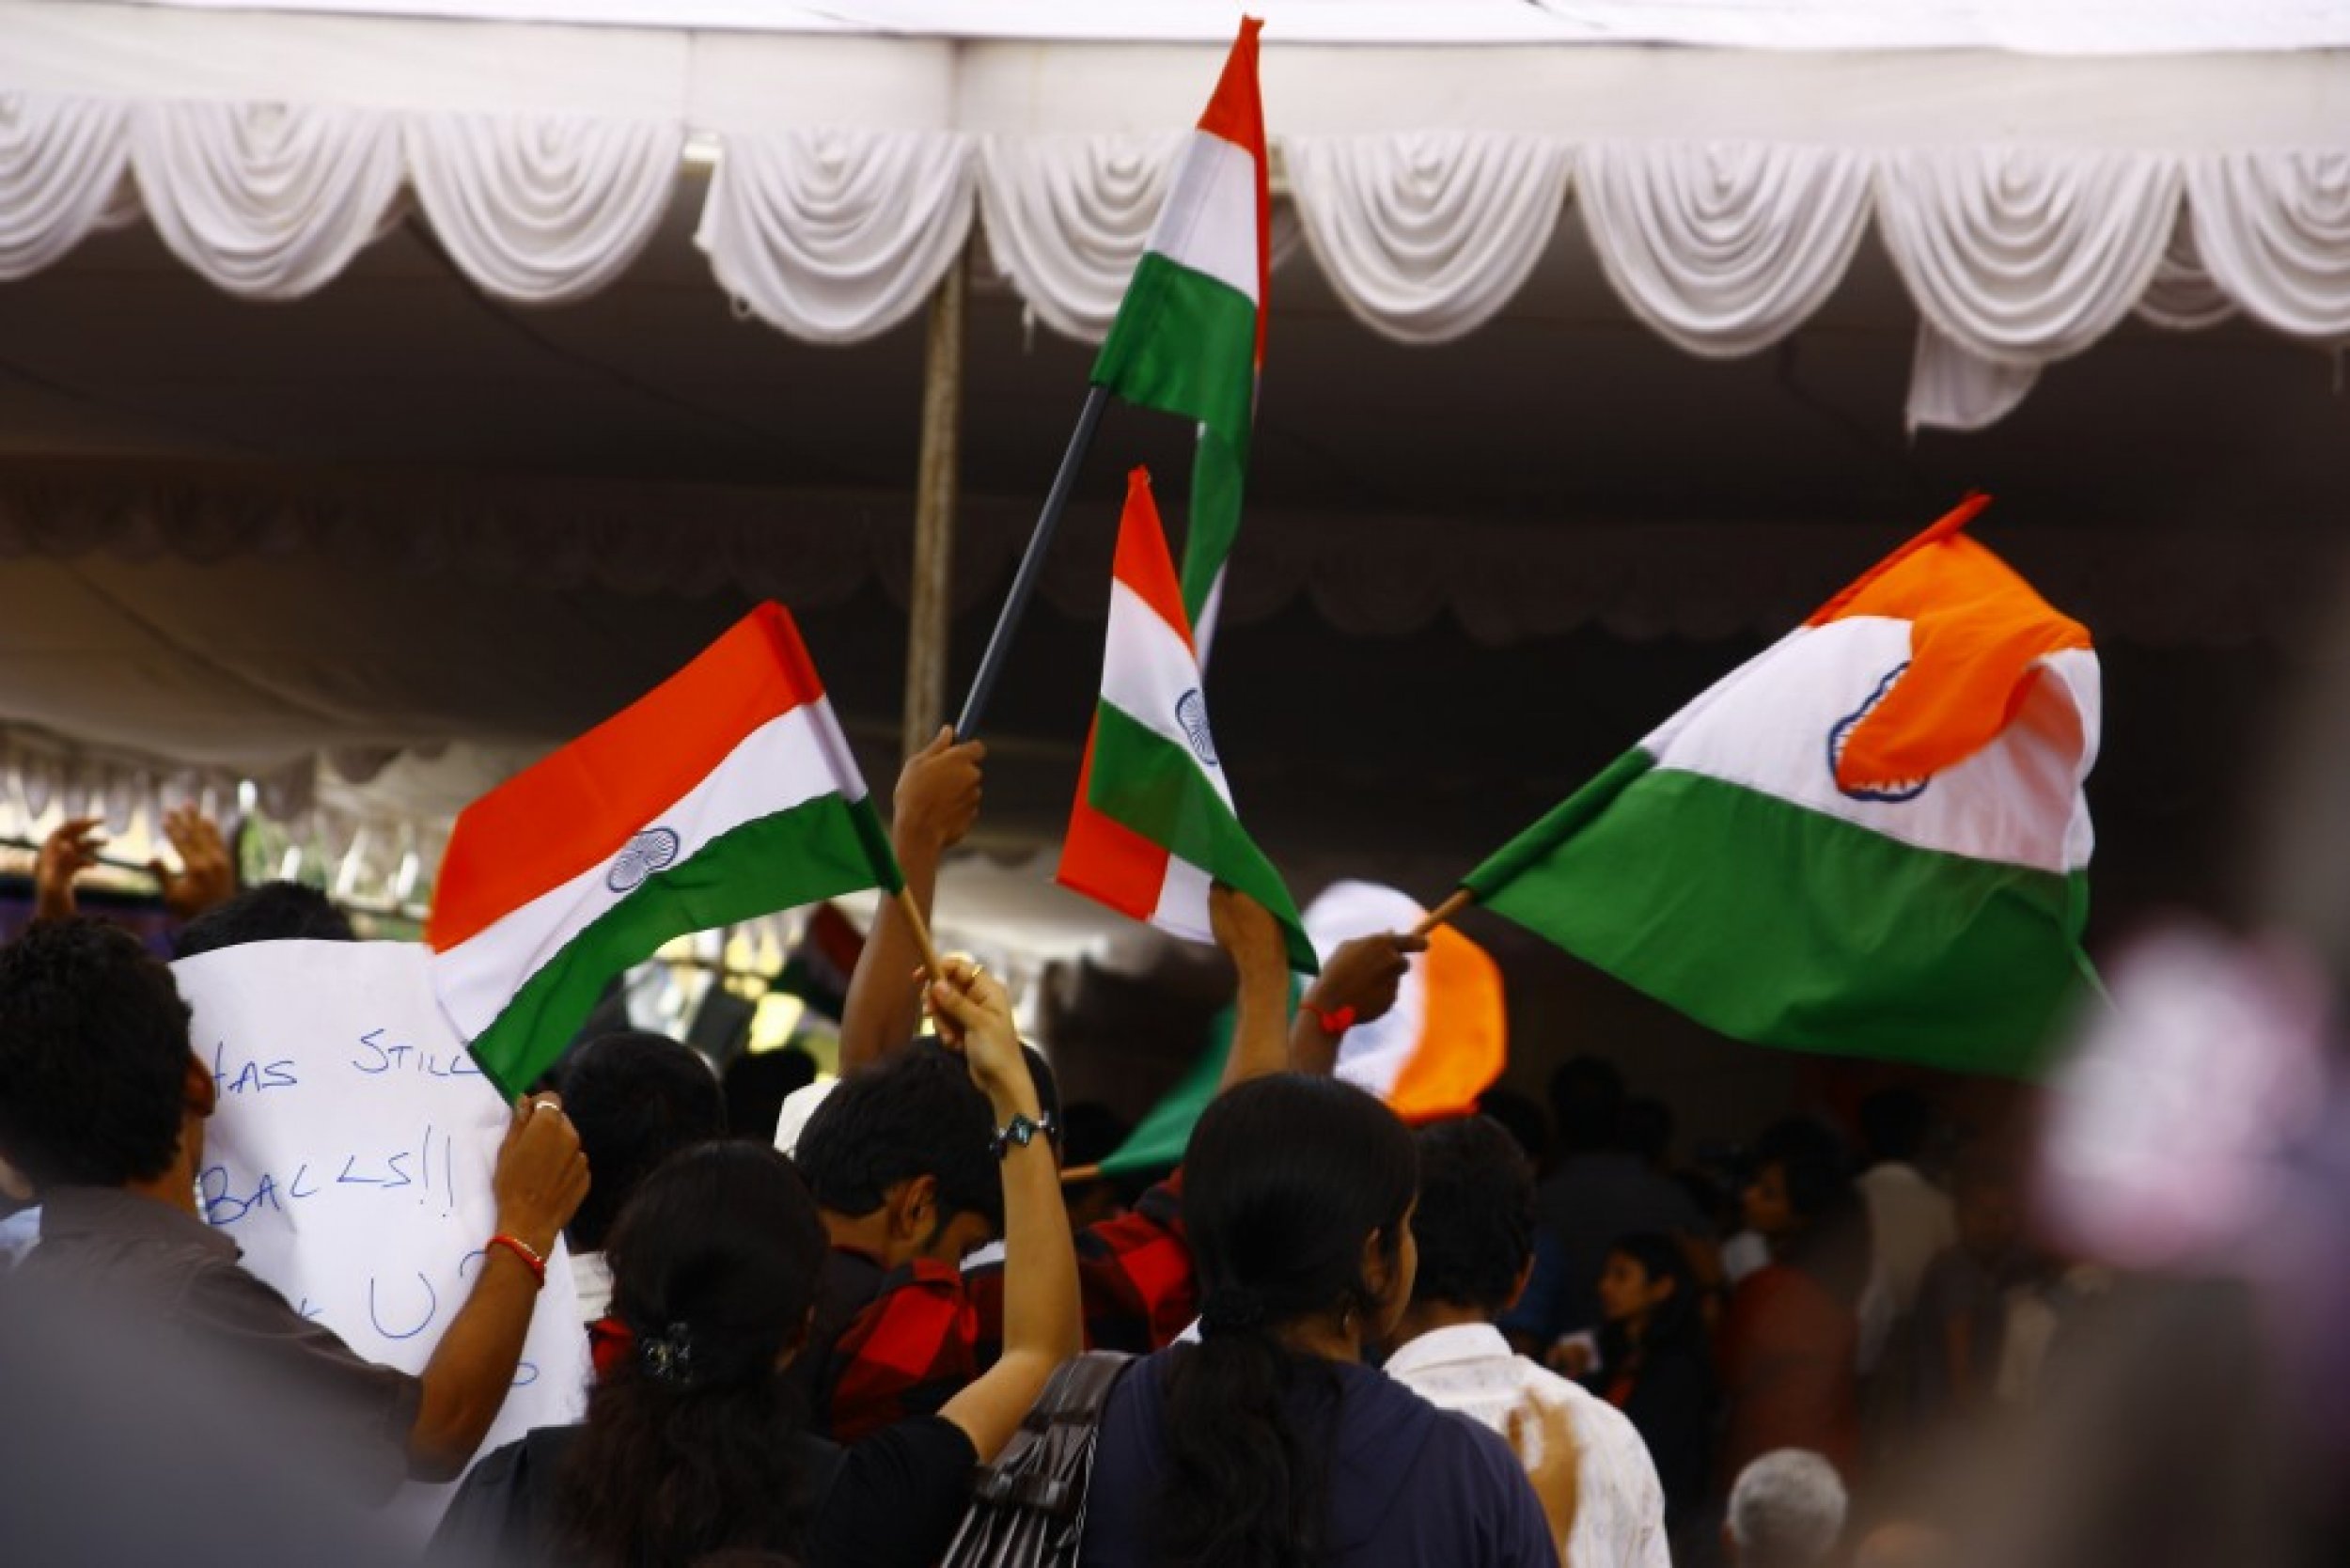 Rally for Anna Hazare in Bangalore, India